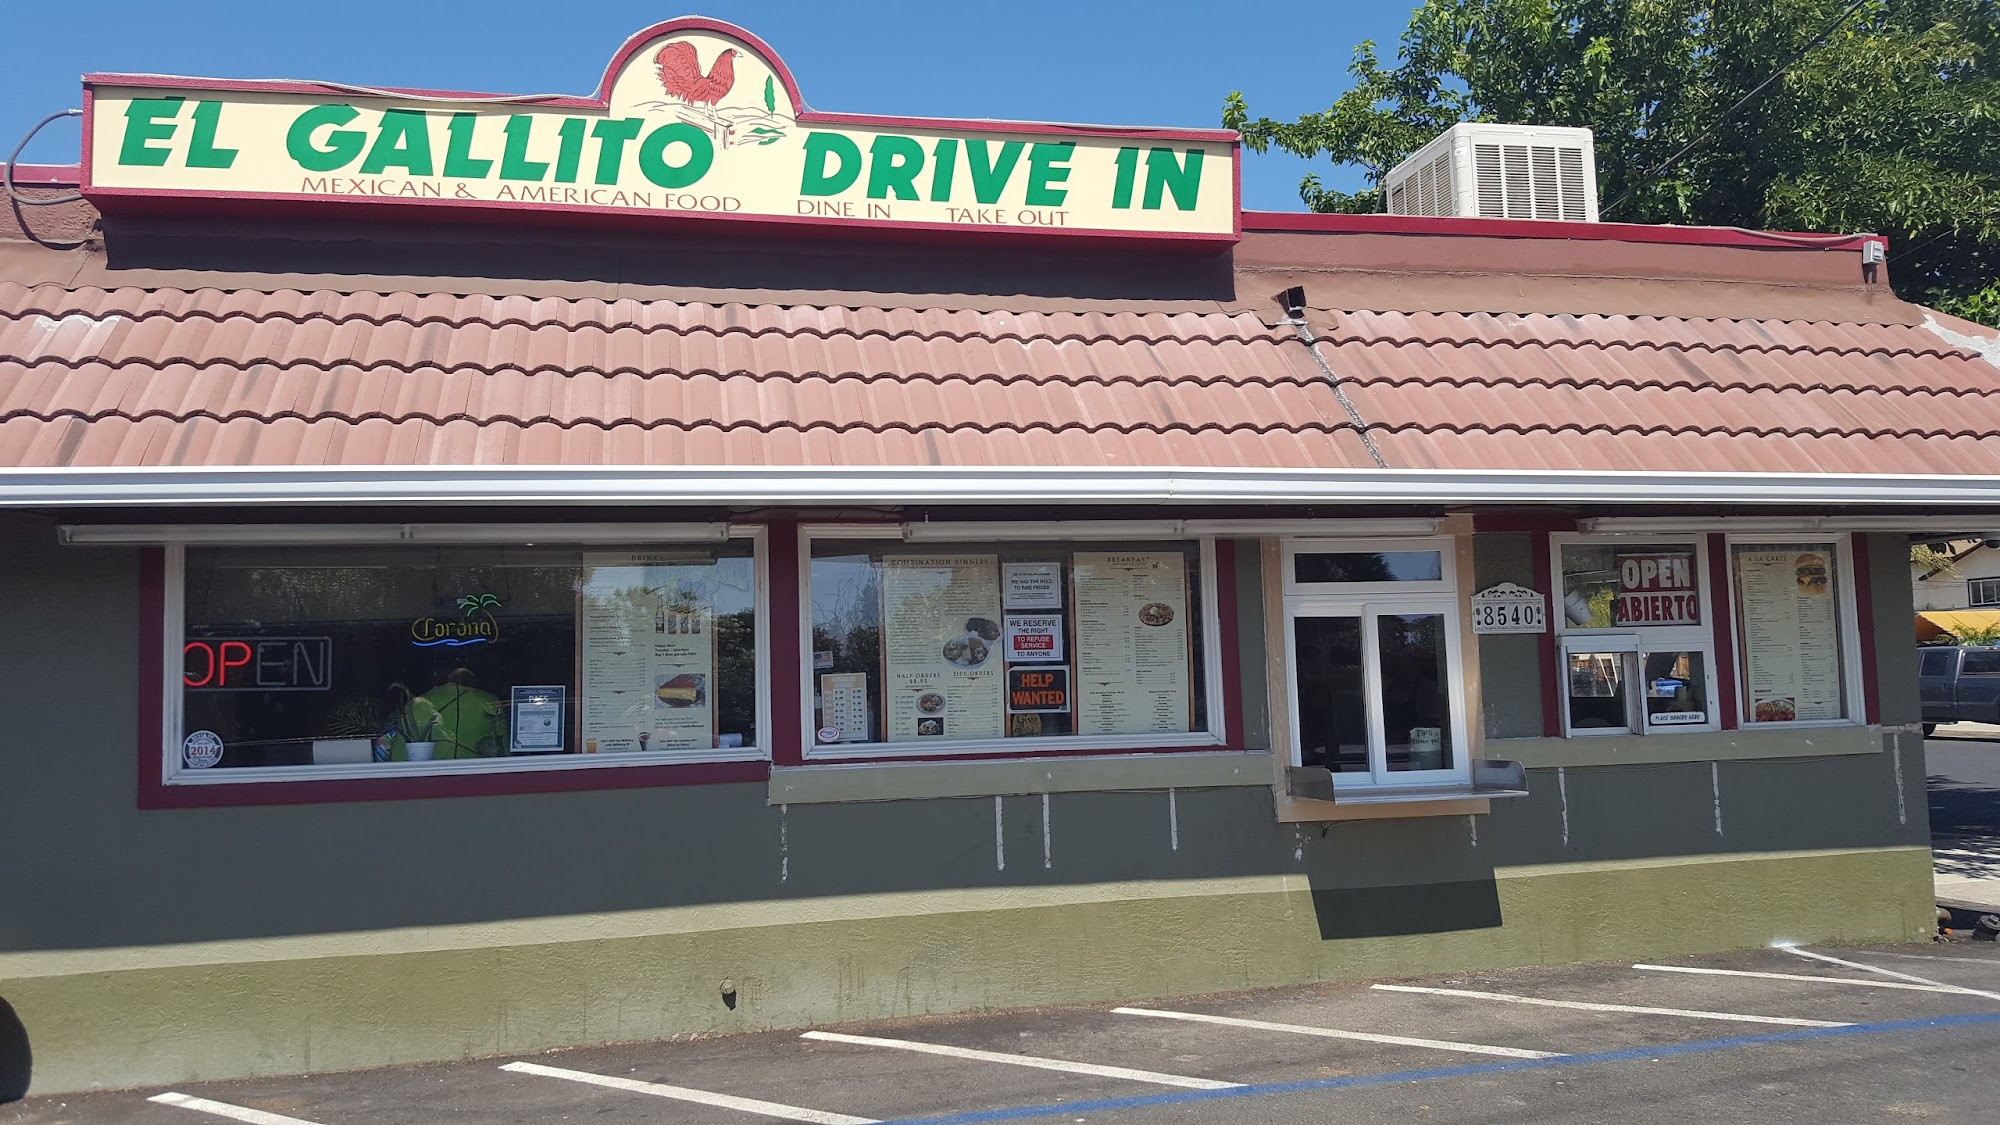 El Gallito Drive-In